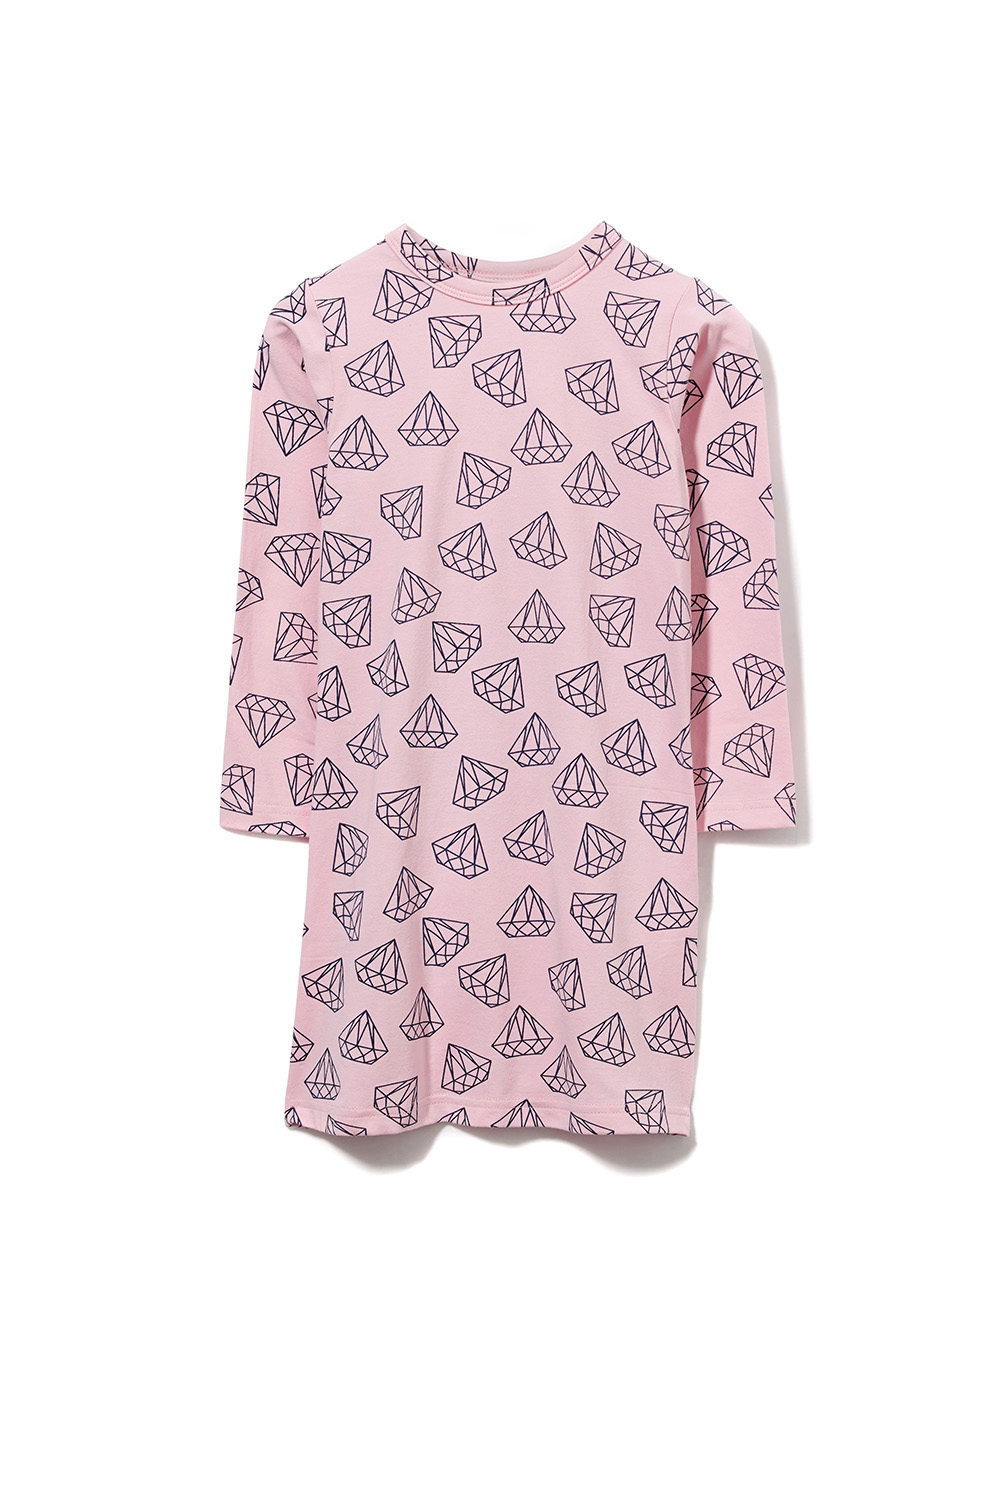 Milky Jewel Nightie Pyjamas CLEARANCE